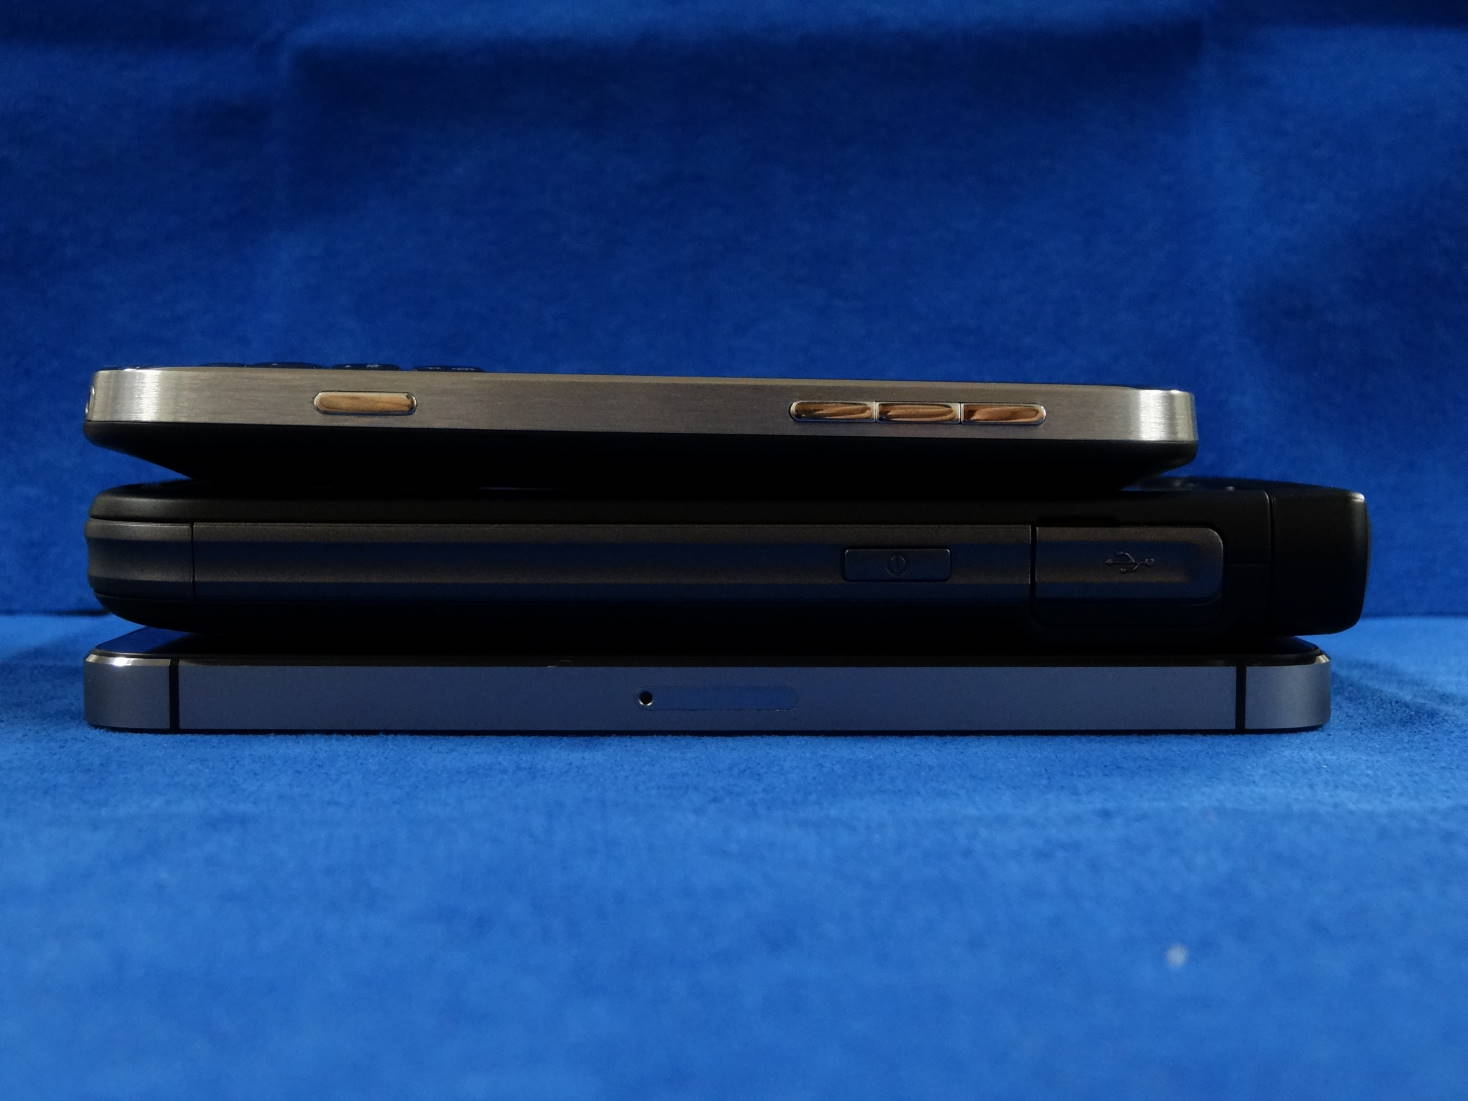 BlackBerry Bold 9900 と NEC TERRAIN と iPhone 5s の縦幅比較